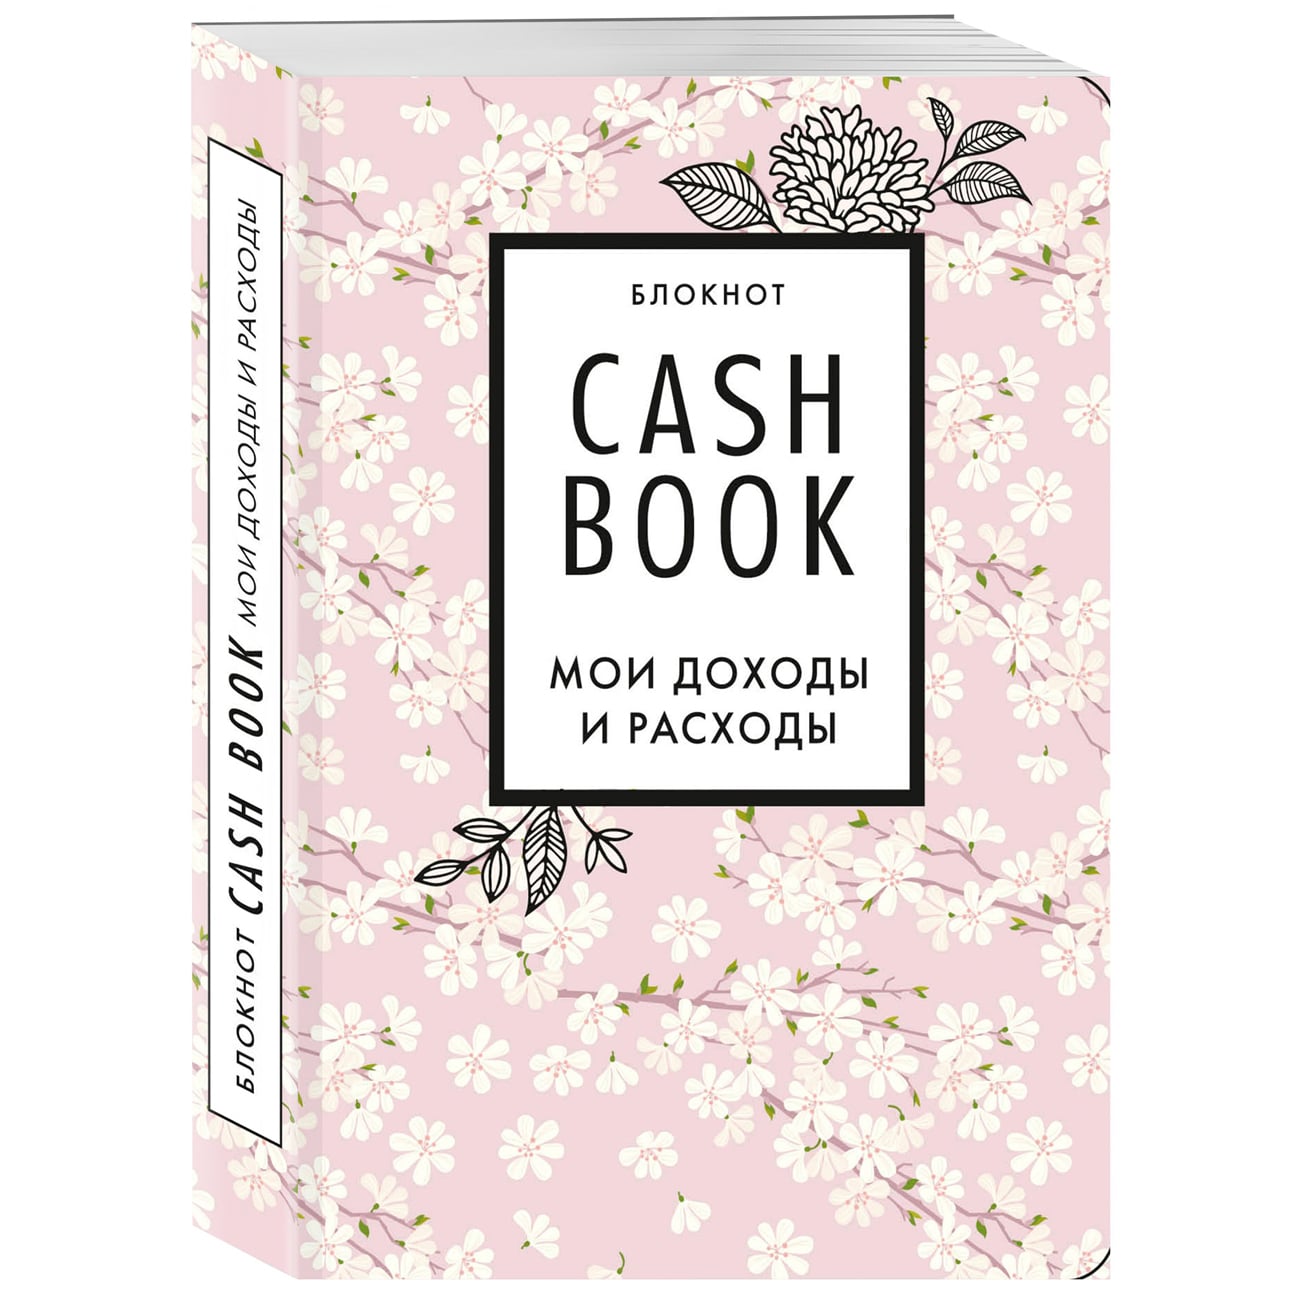  Блокнот CashBook 